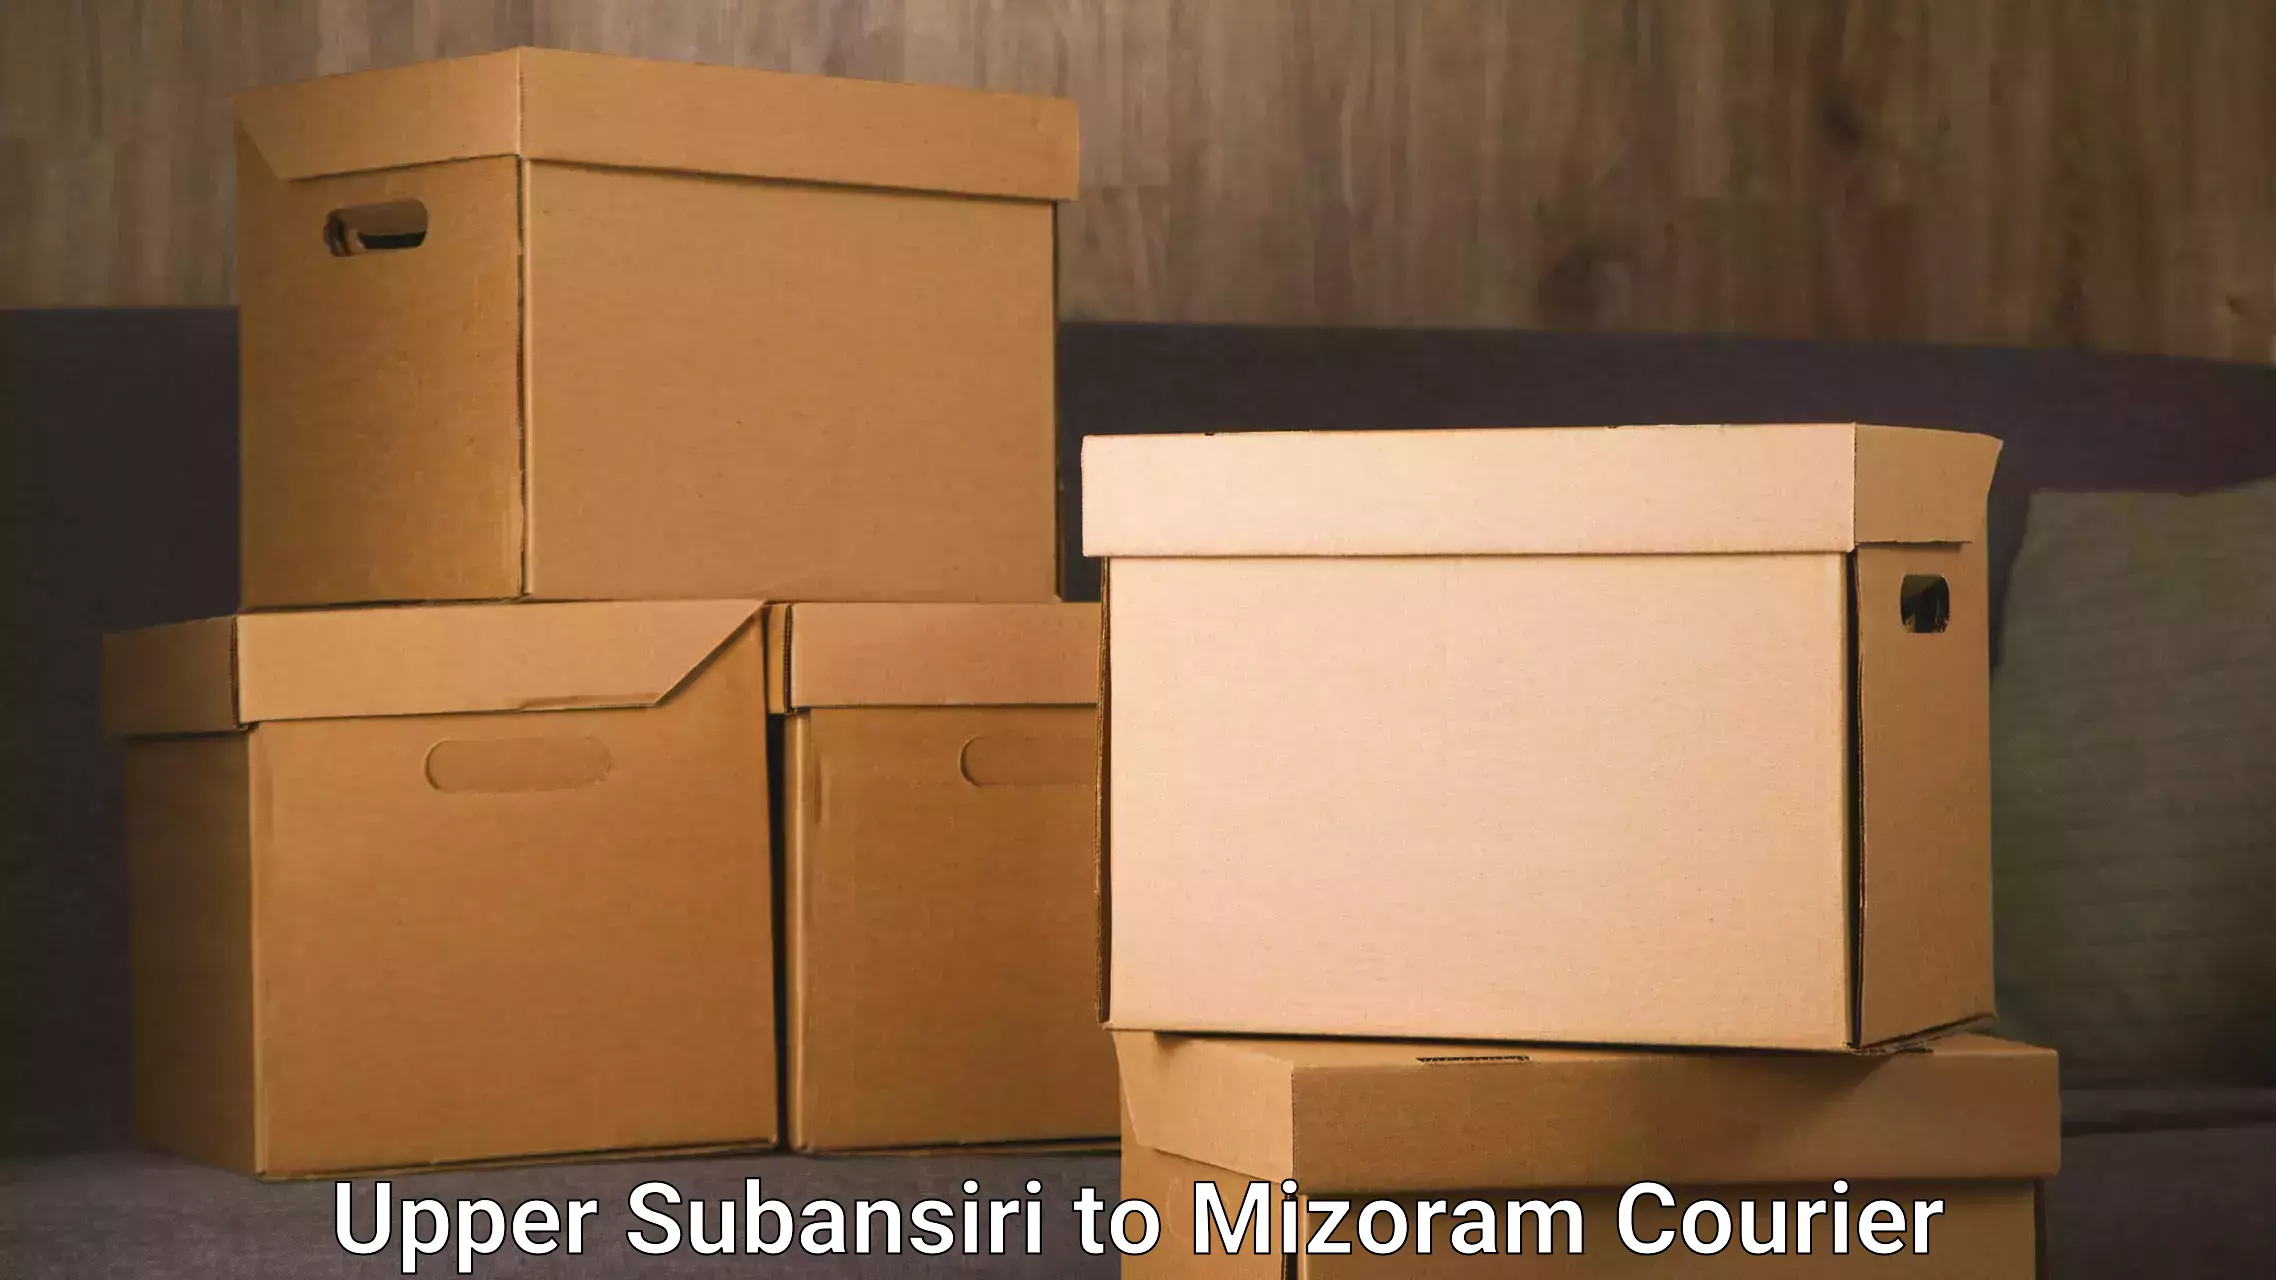 Courier service innovation Upper Subansiri to Mizoram